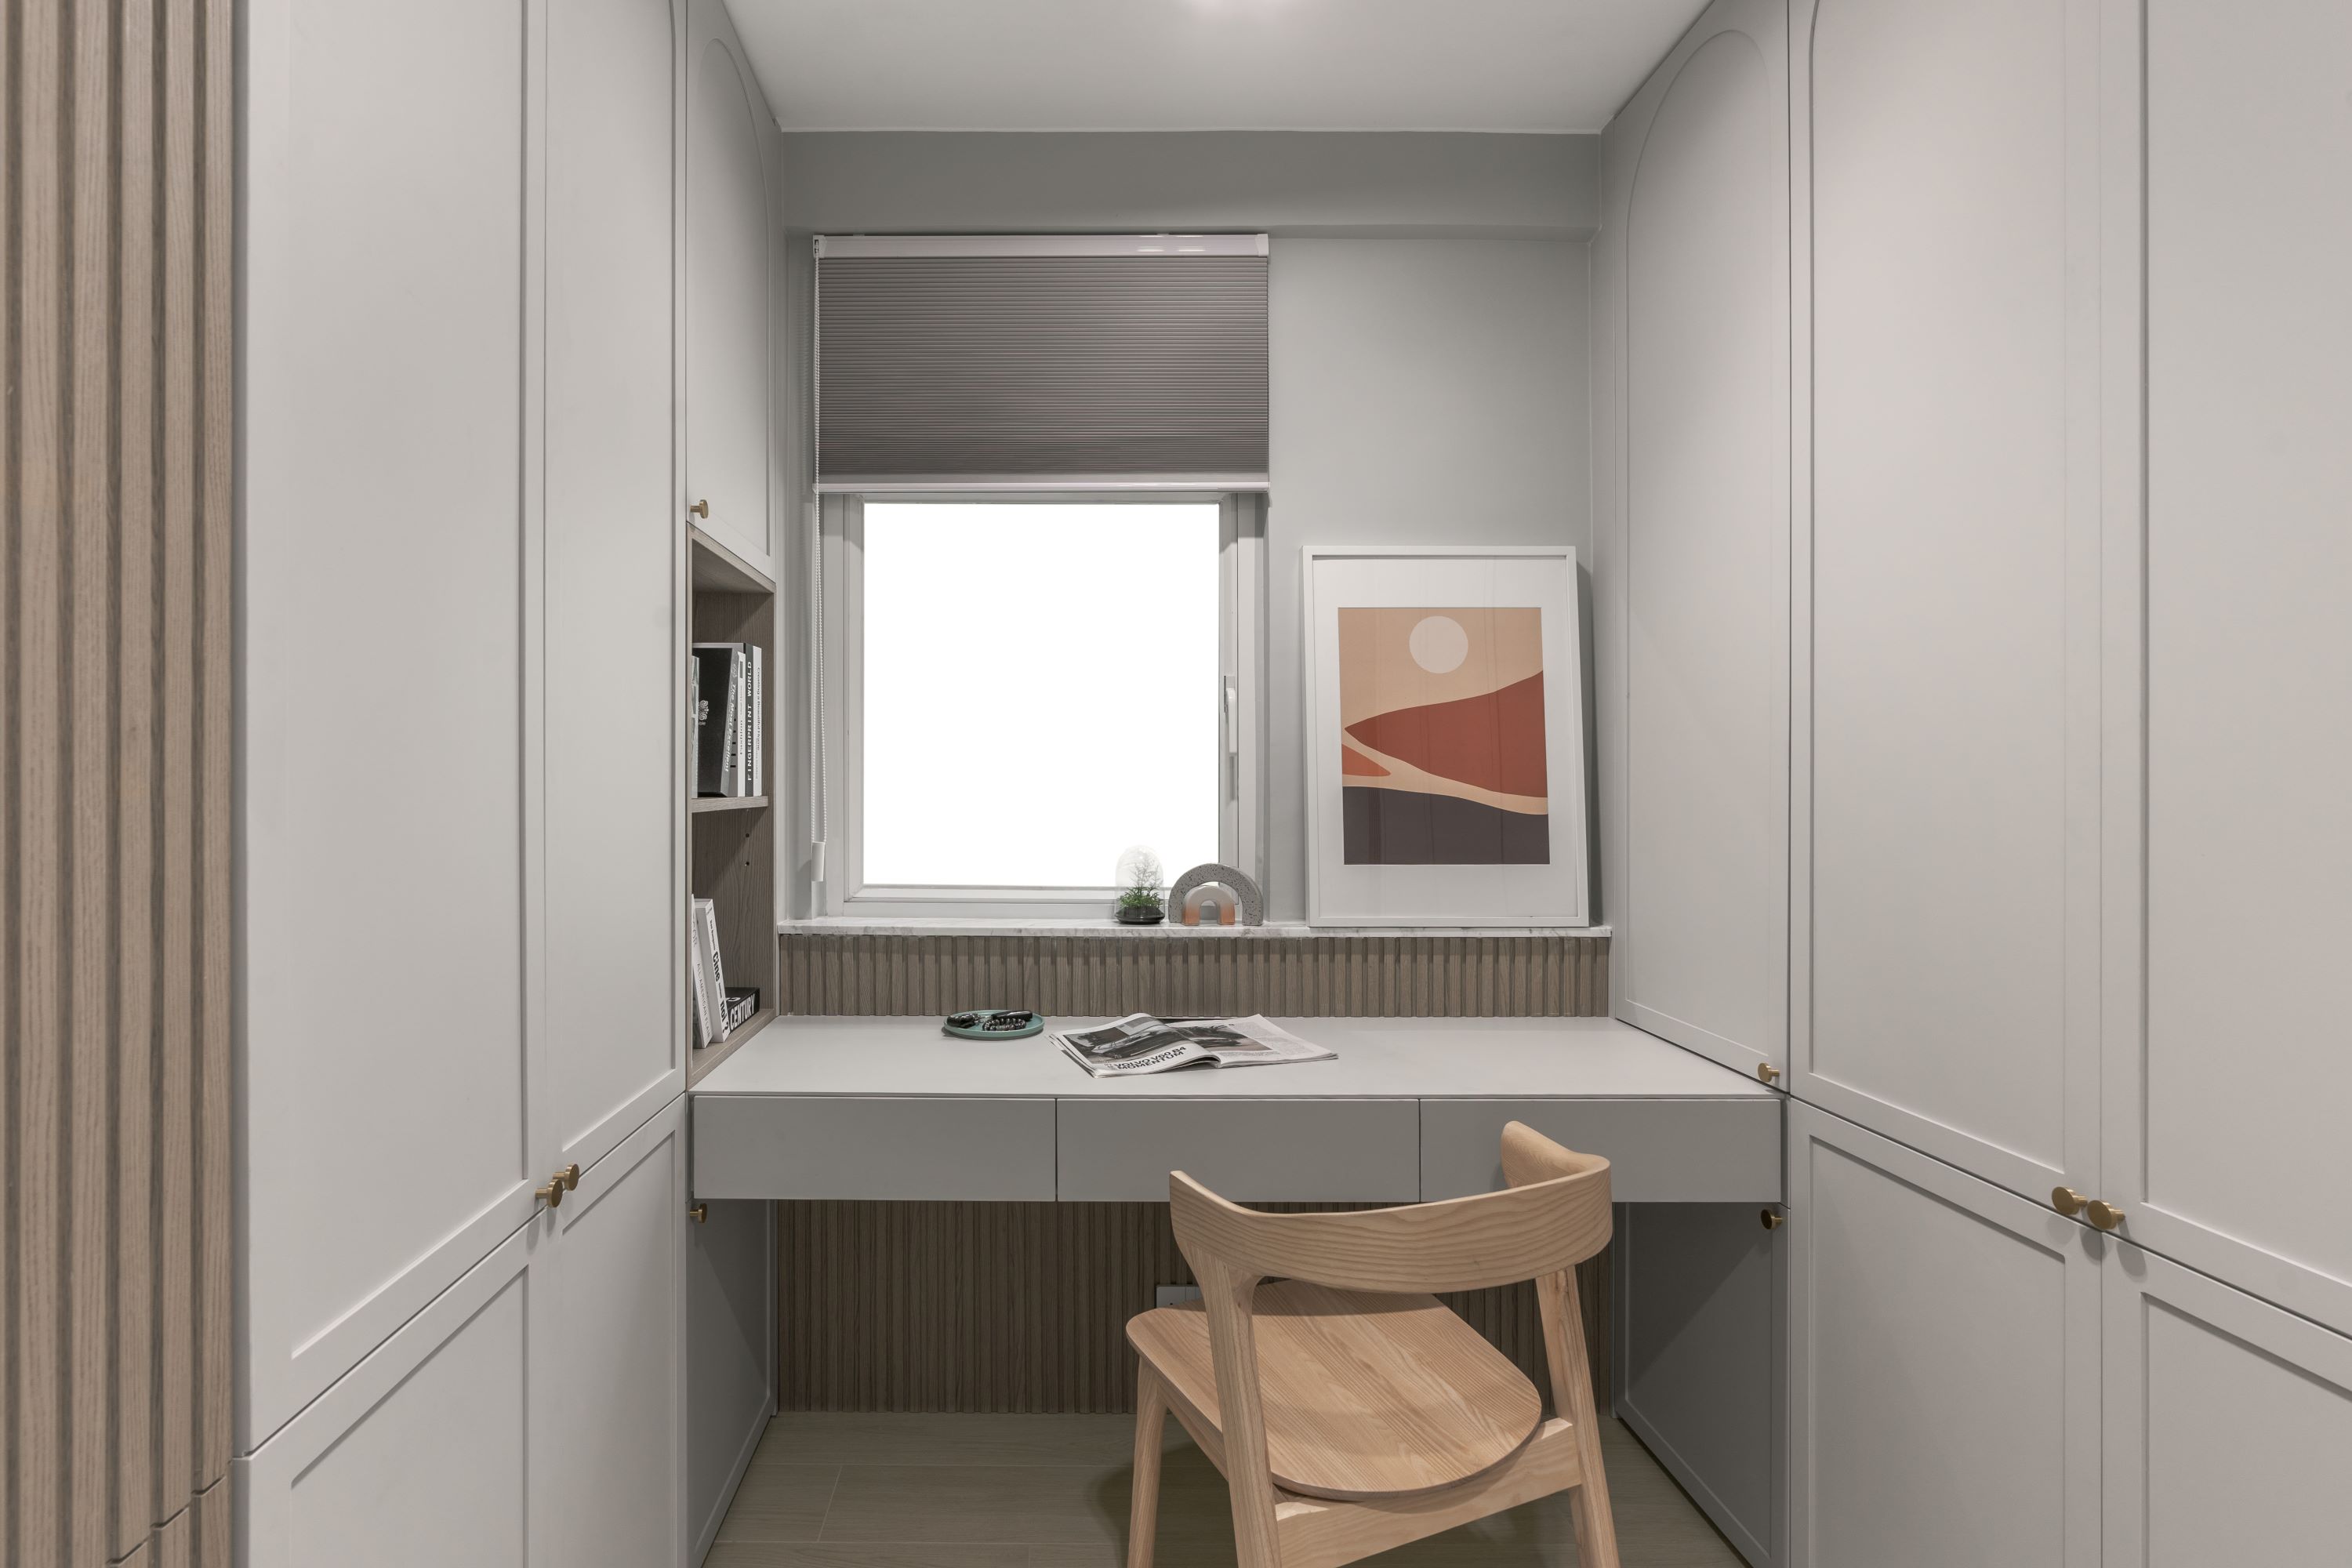 Jason Yeung - Innergy Interior design studio - BEDFORD GARDENS